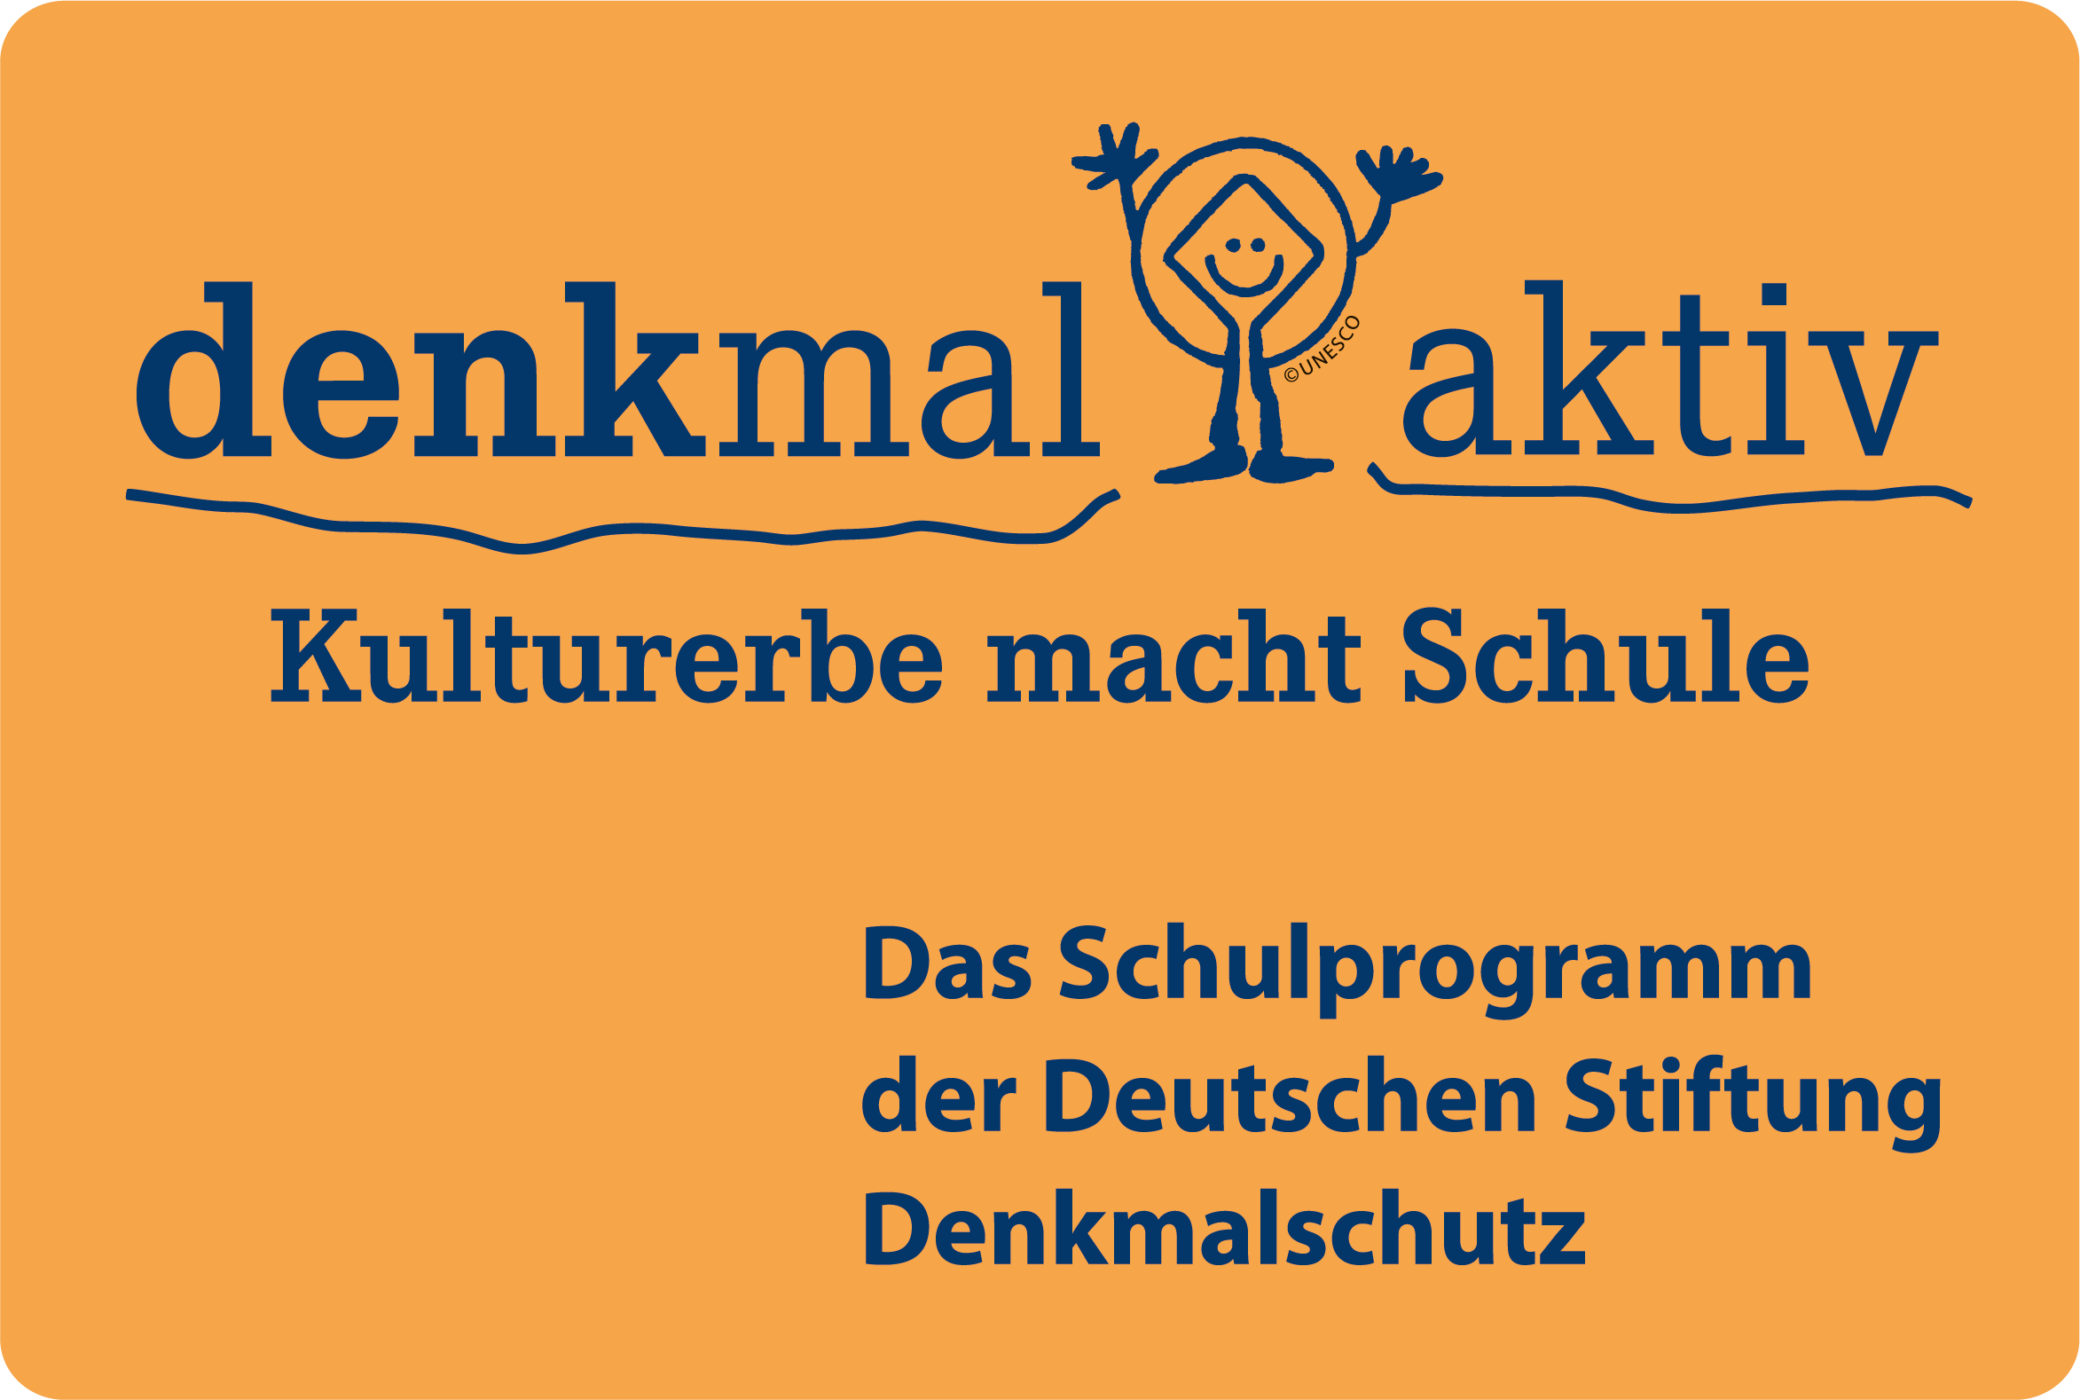 denkmal_aktiv_Logo_standalone_CMYK_Variante_oWeissraum.png